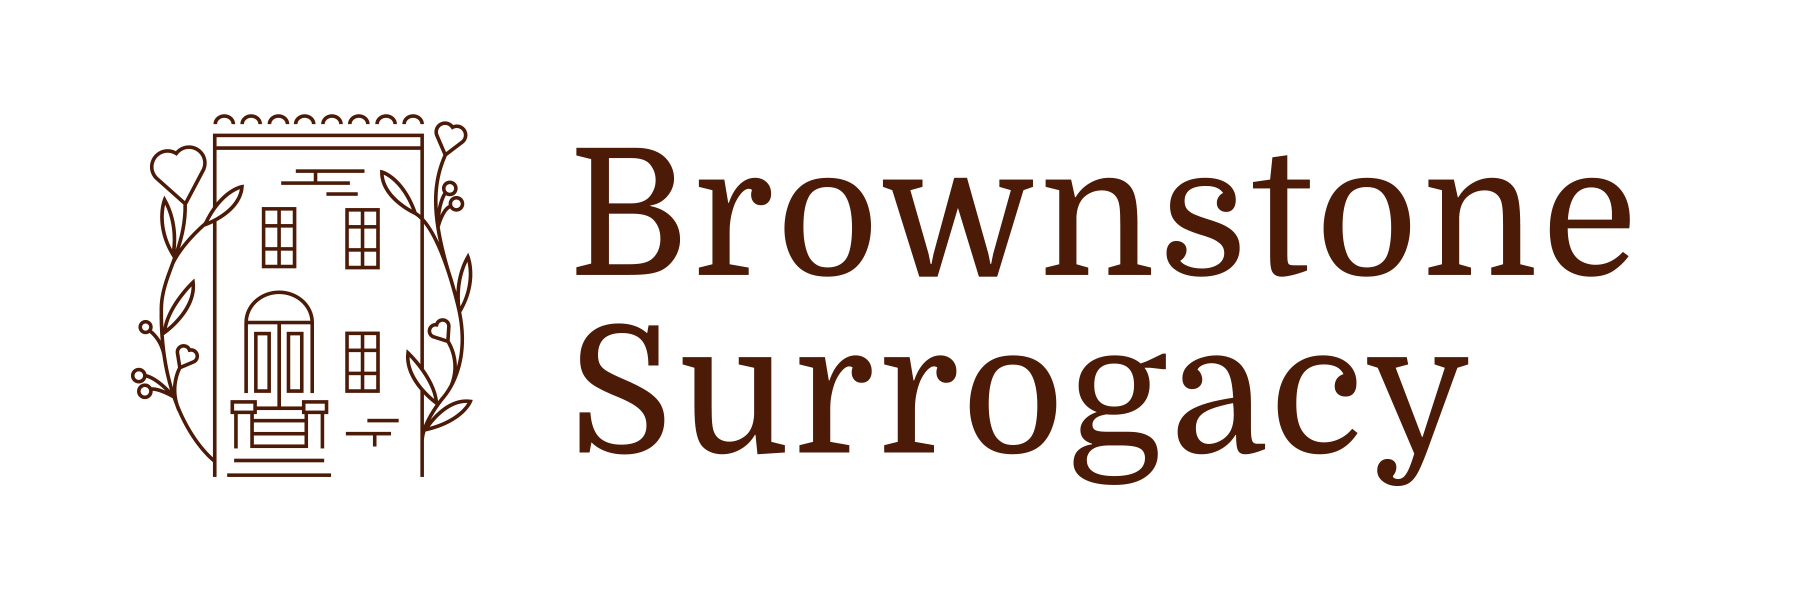 Brownstone Surrogacy